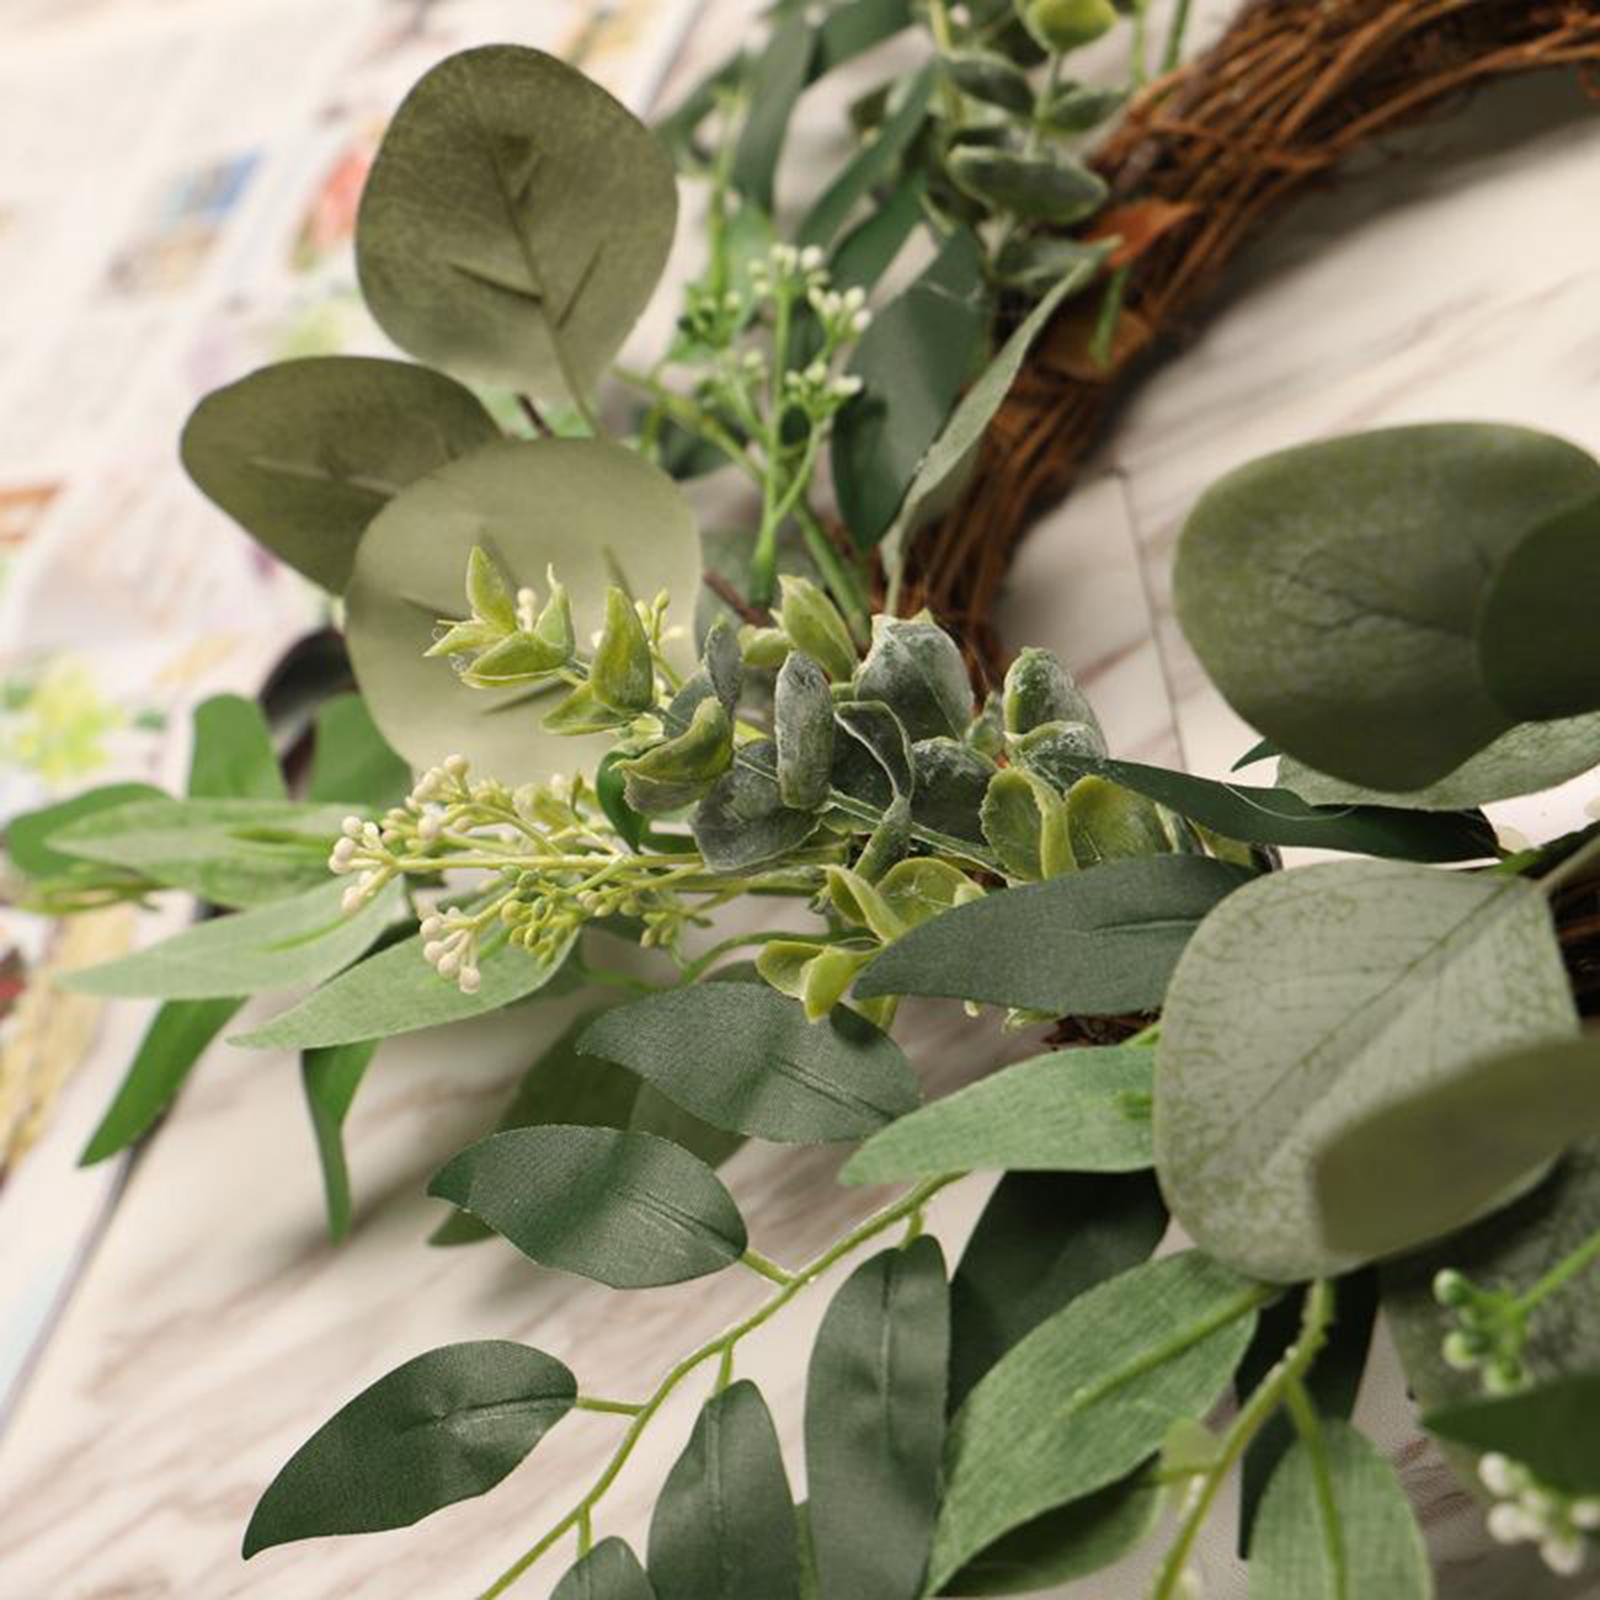 Green Eucalyptus Wreath, Reusable Artificial Leaf Decoration for Front Door  Decoration "/20"